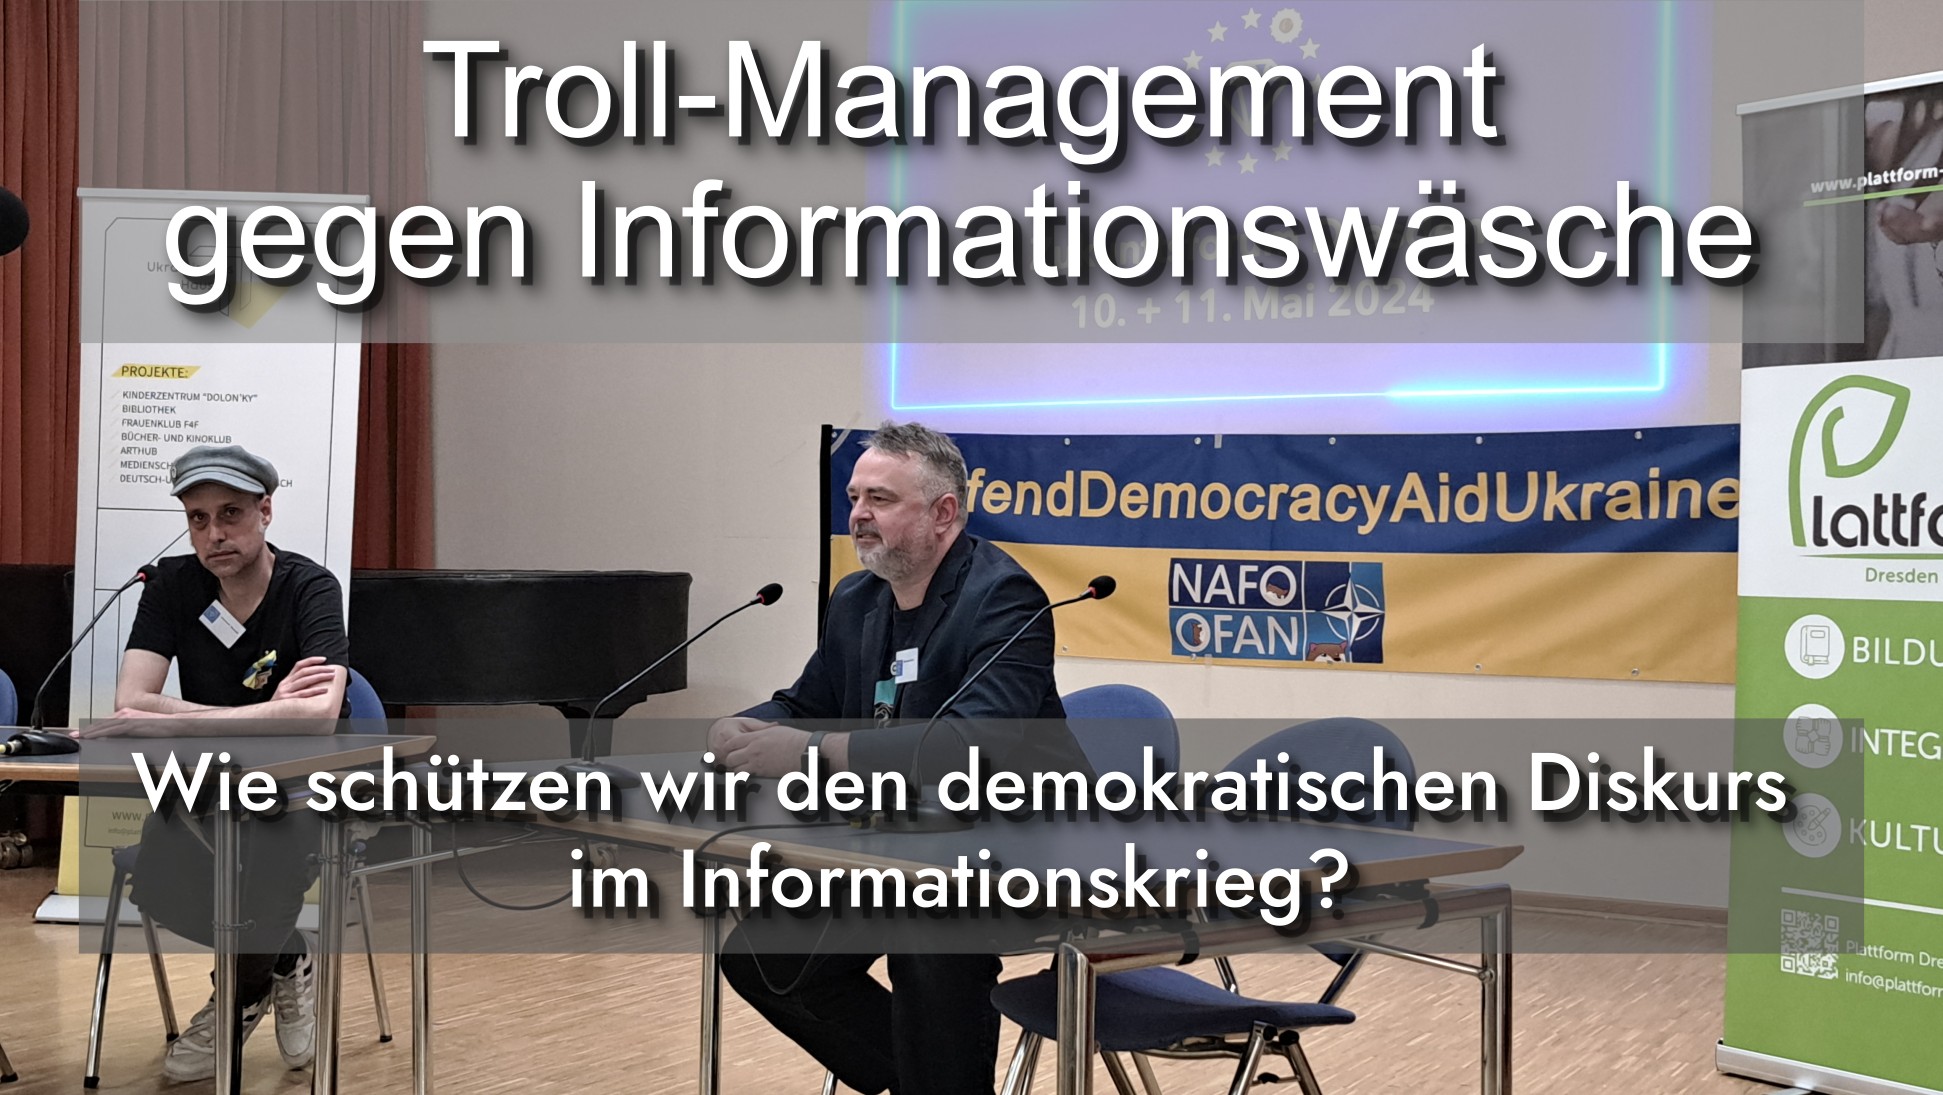 Troll-Management